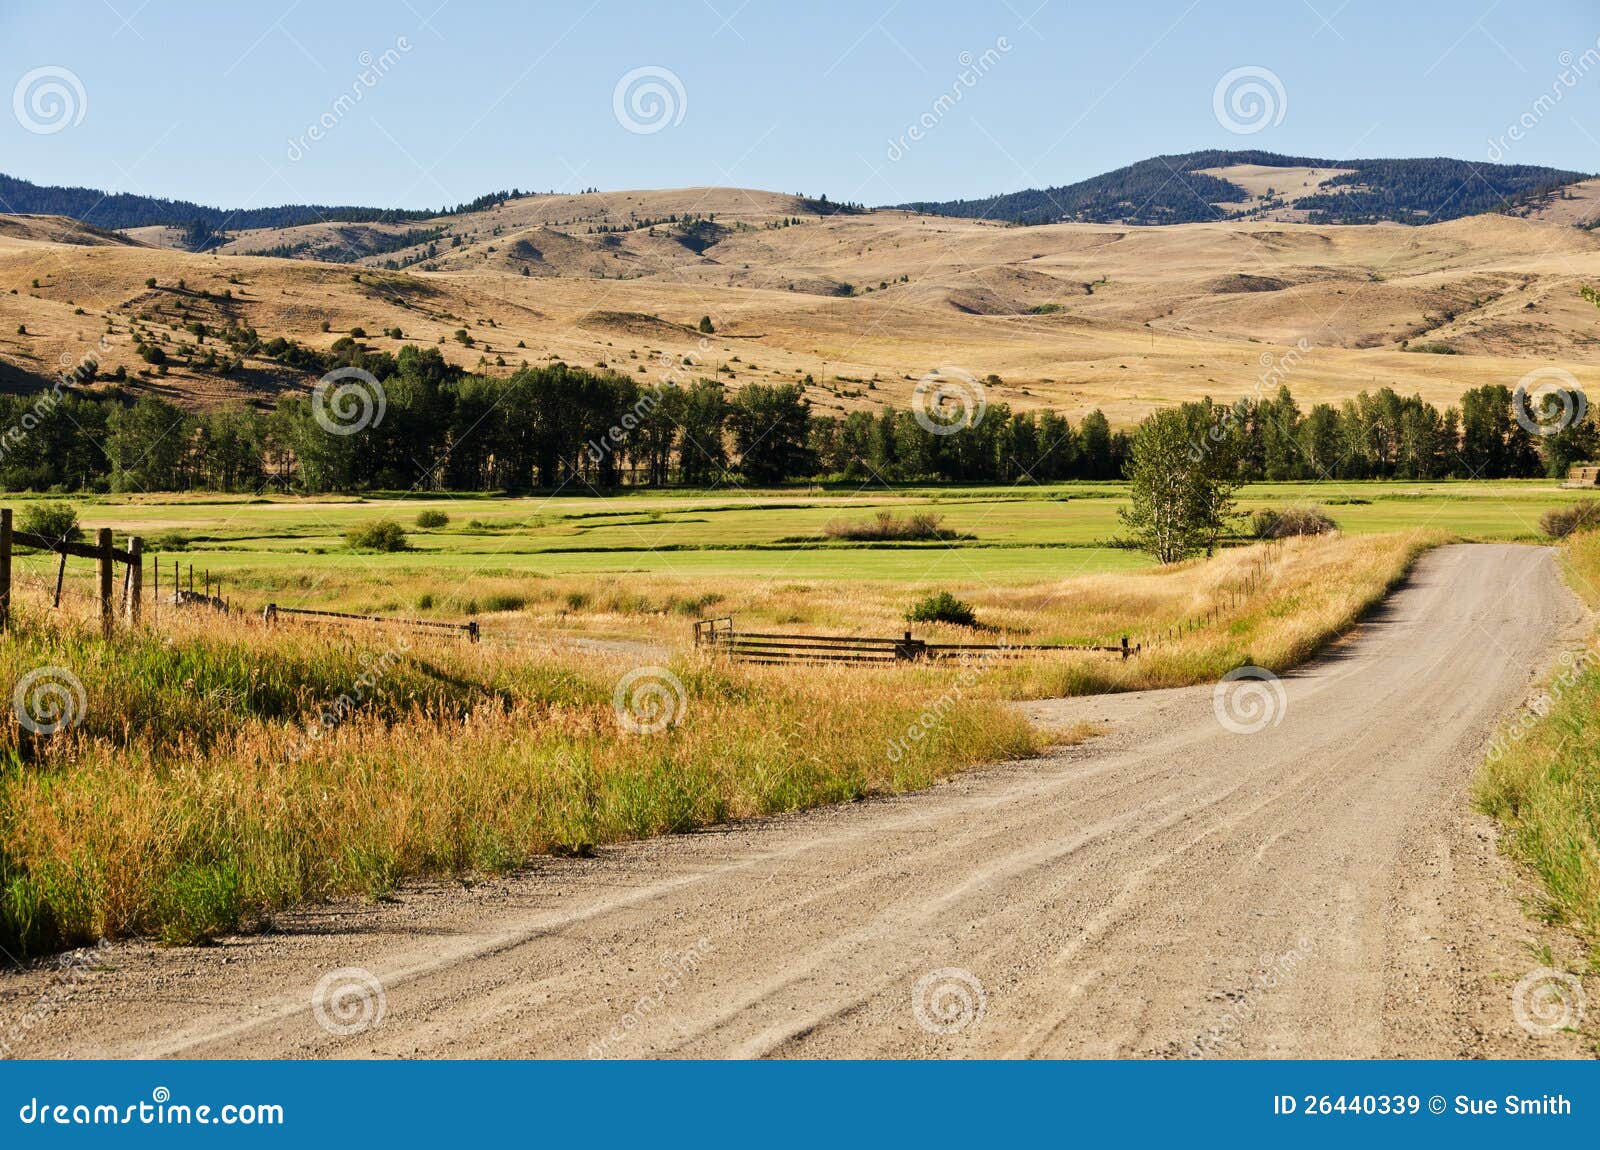 ranch land along a gravel road